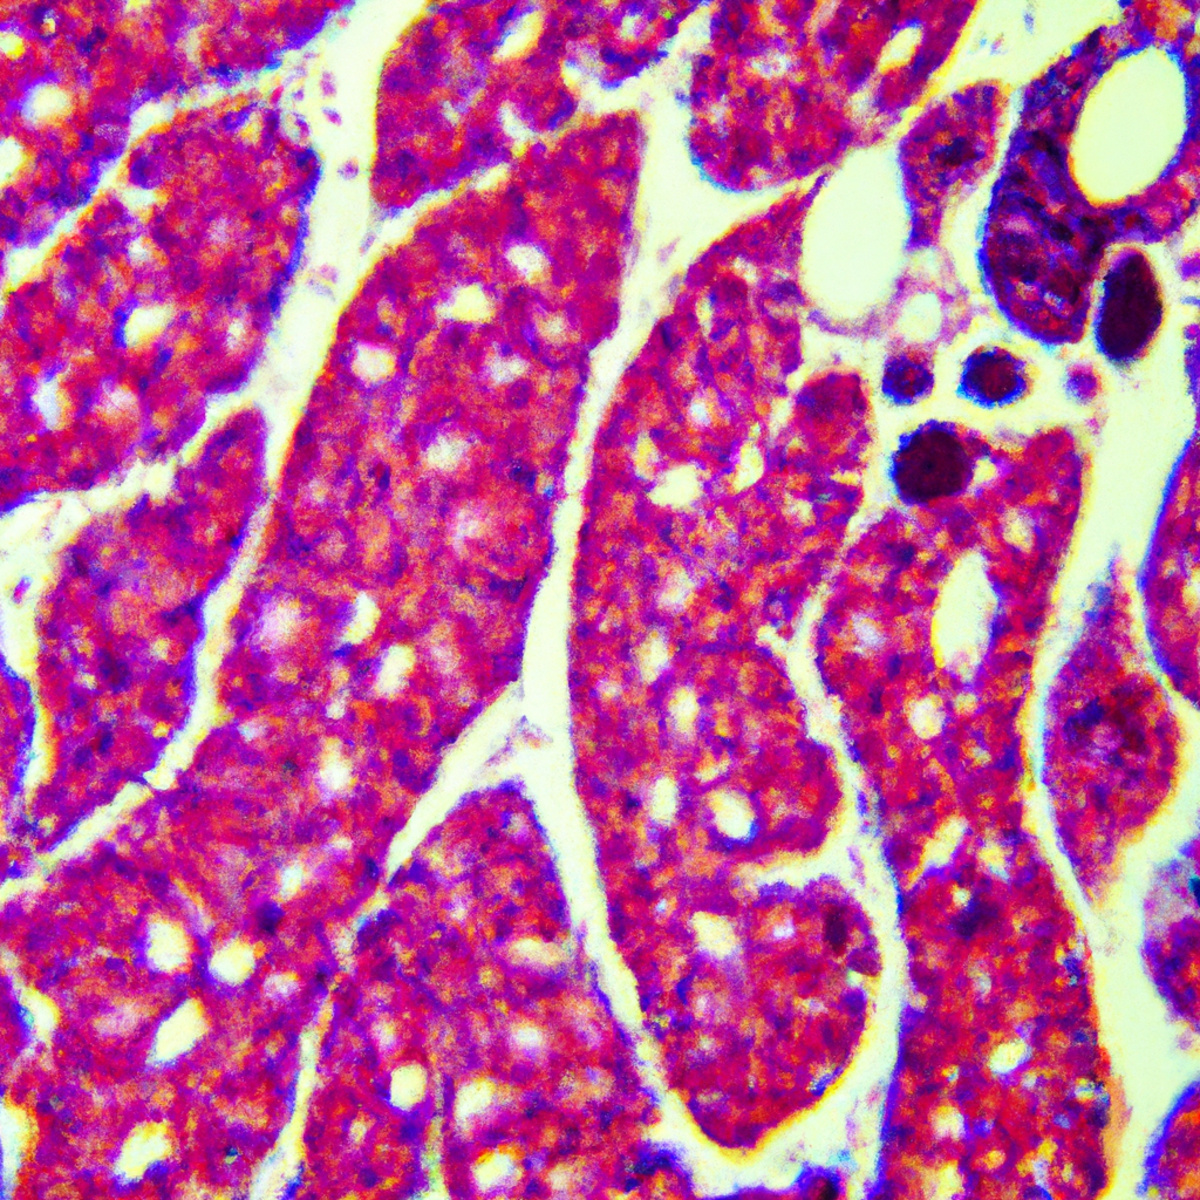 Close-up of kidney biopsy slide showing dense deposits in glomeruli, illustrating C3 Glomerulopathy.